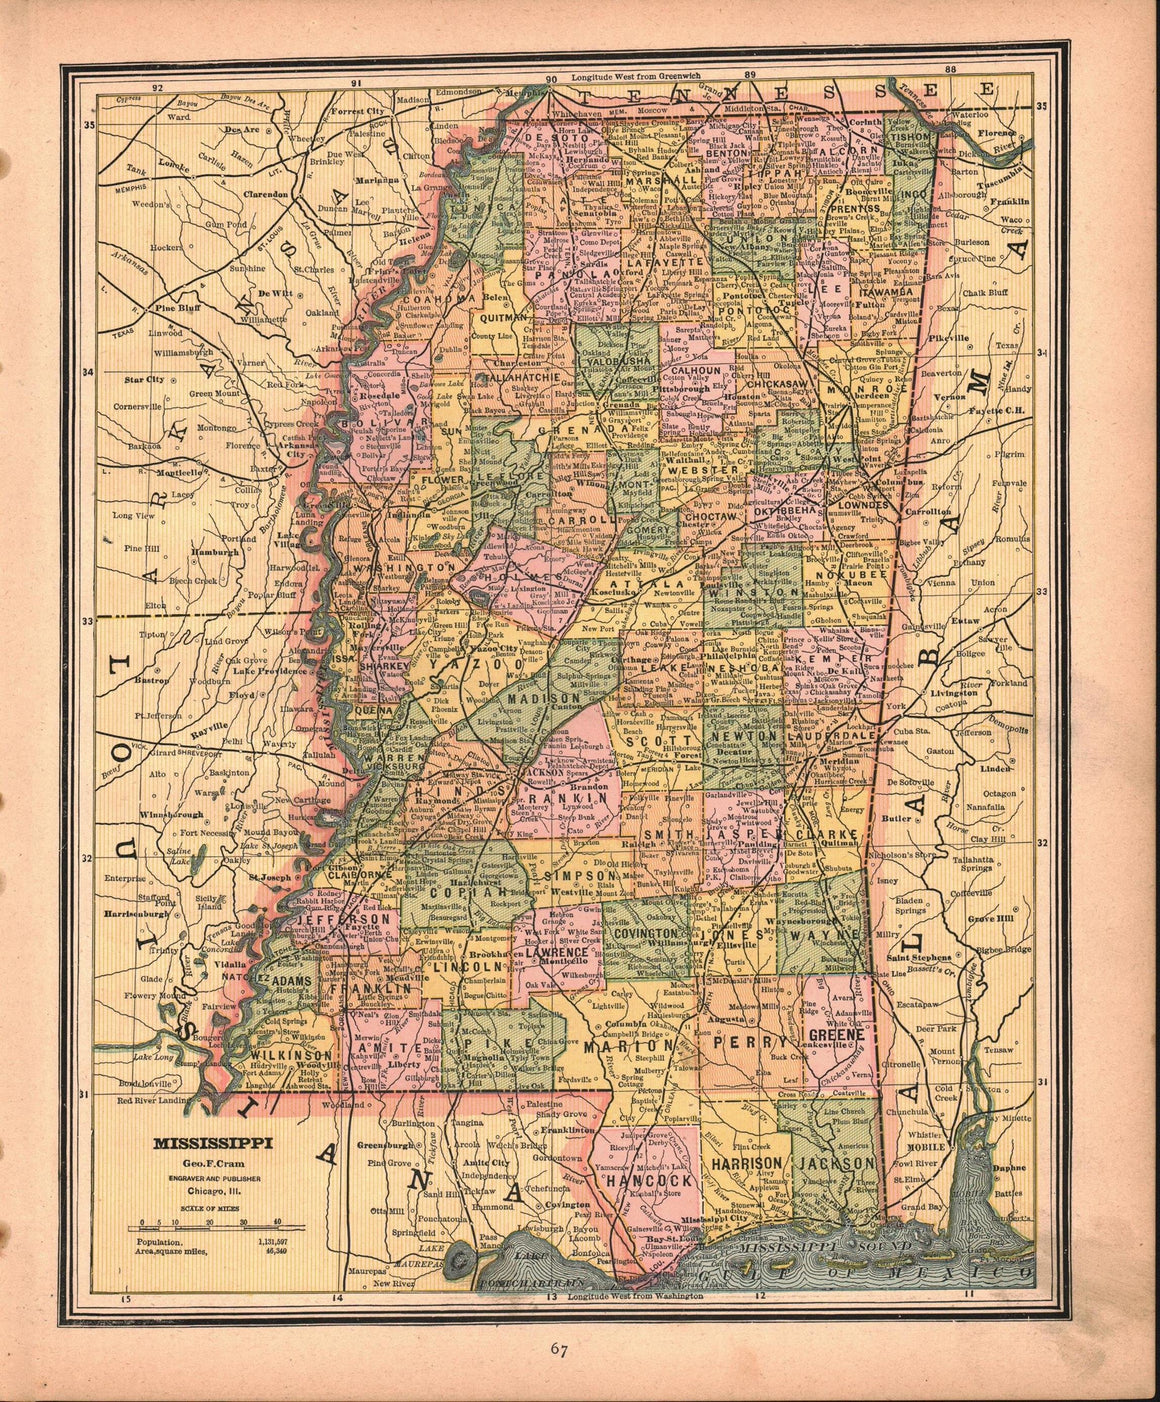 1887 Mississippi Louisiana - Cram